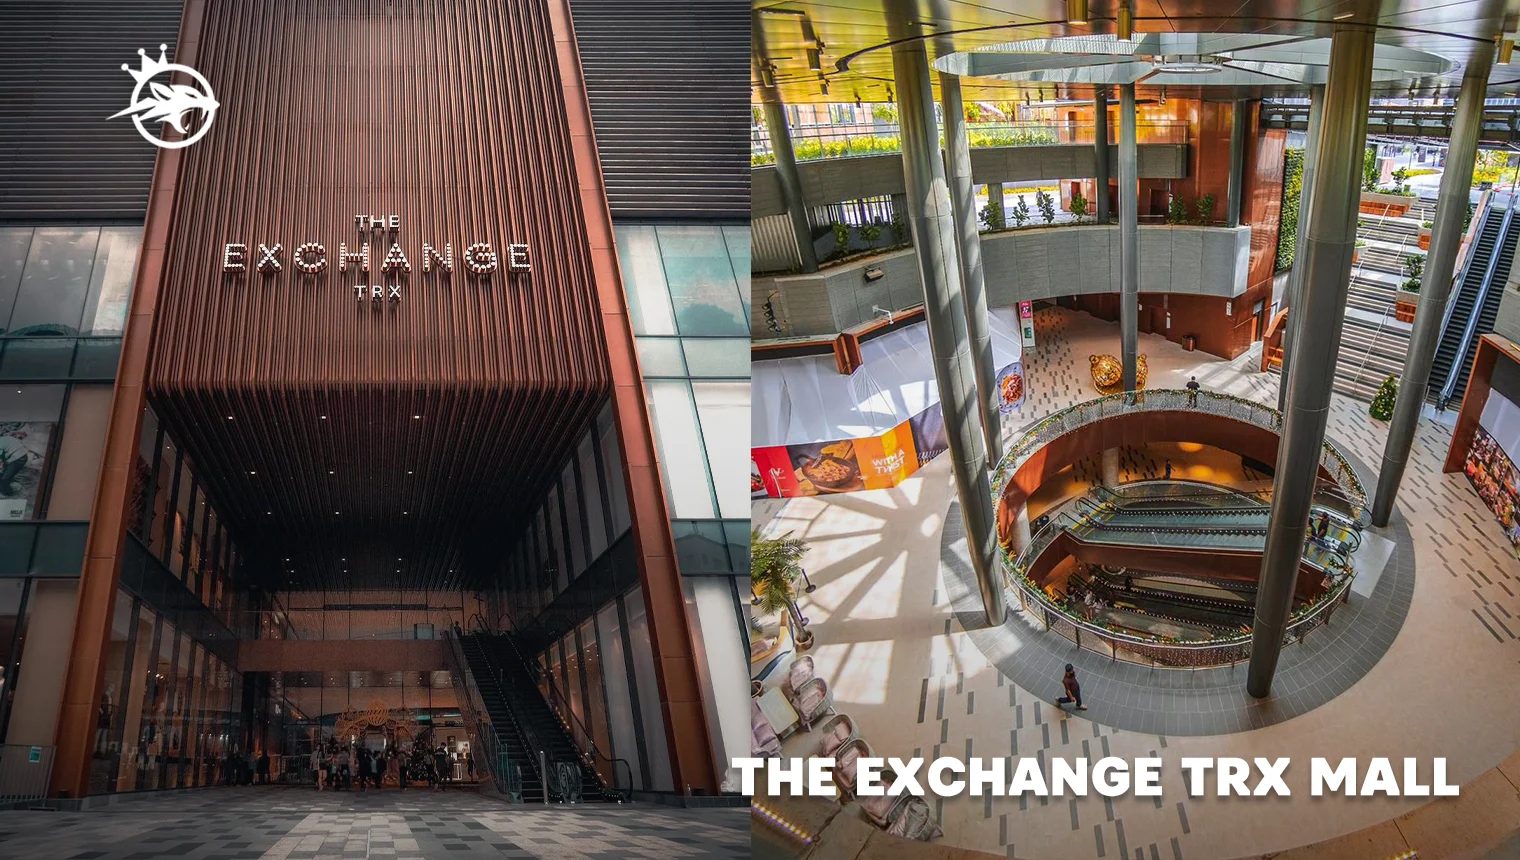 The Exchange TRX Mall